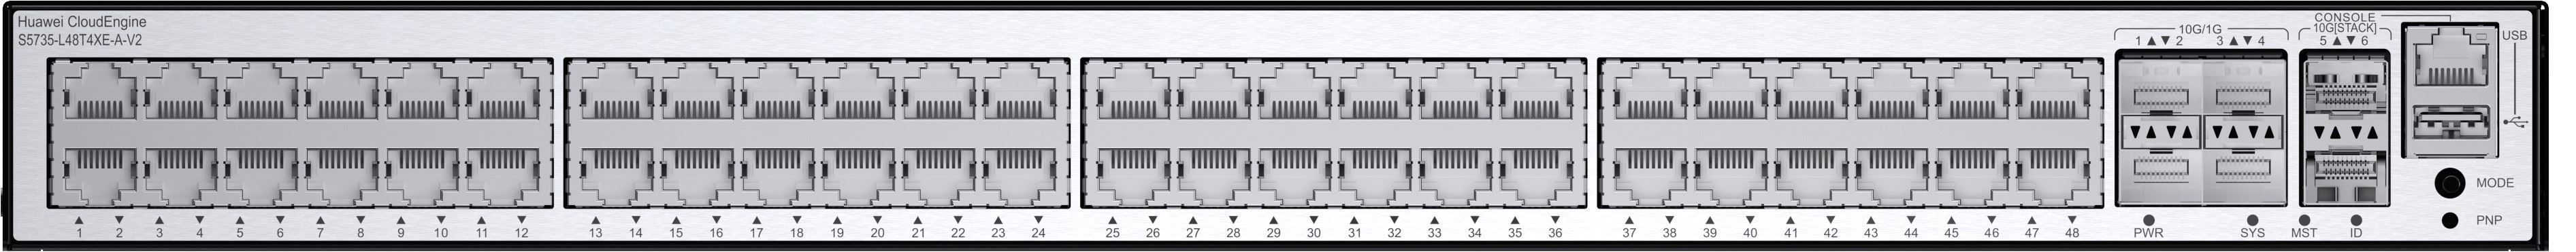 HUAWEI 10/100/1000Base-T 48 port 4 x 10 GE SFP+ port 2 x12GE stack port switch